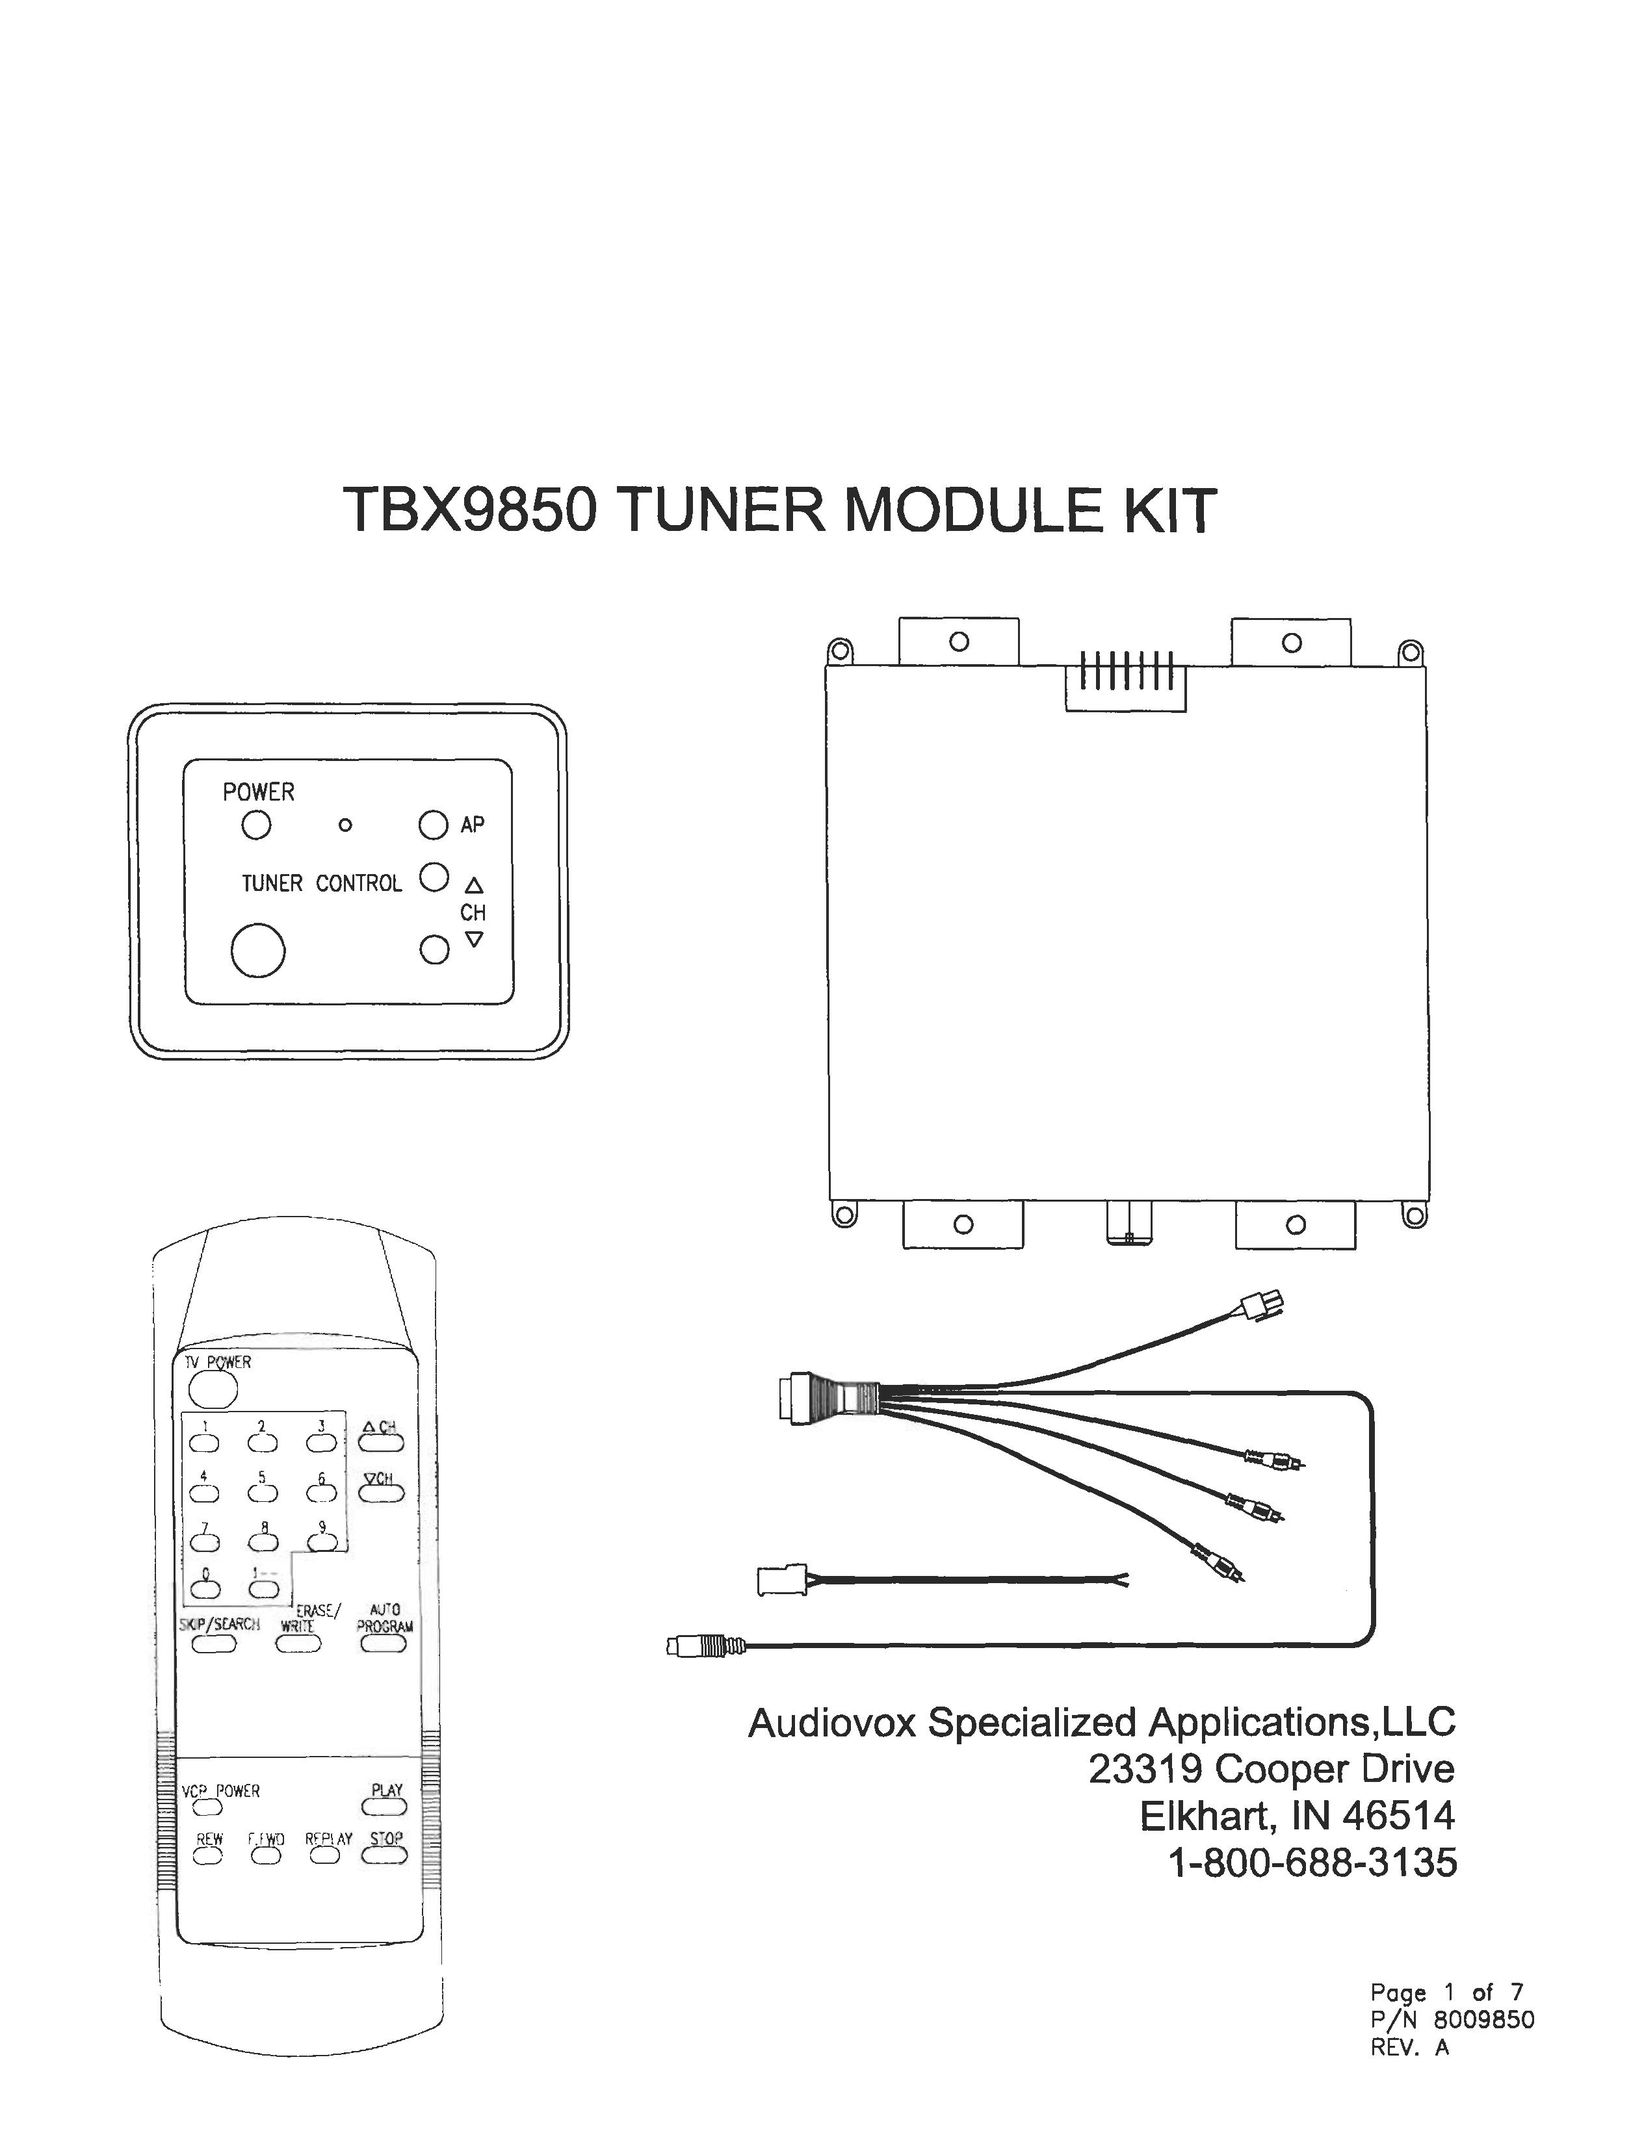 Audiovox TBX9850 TV Receiver User Manual